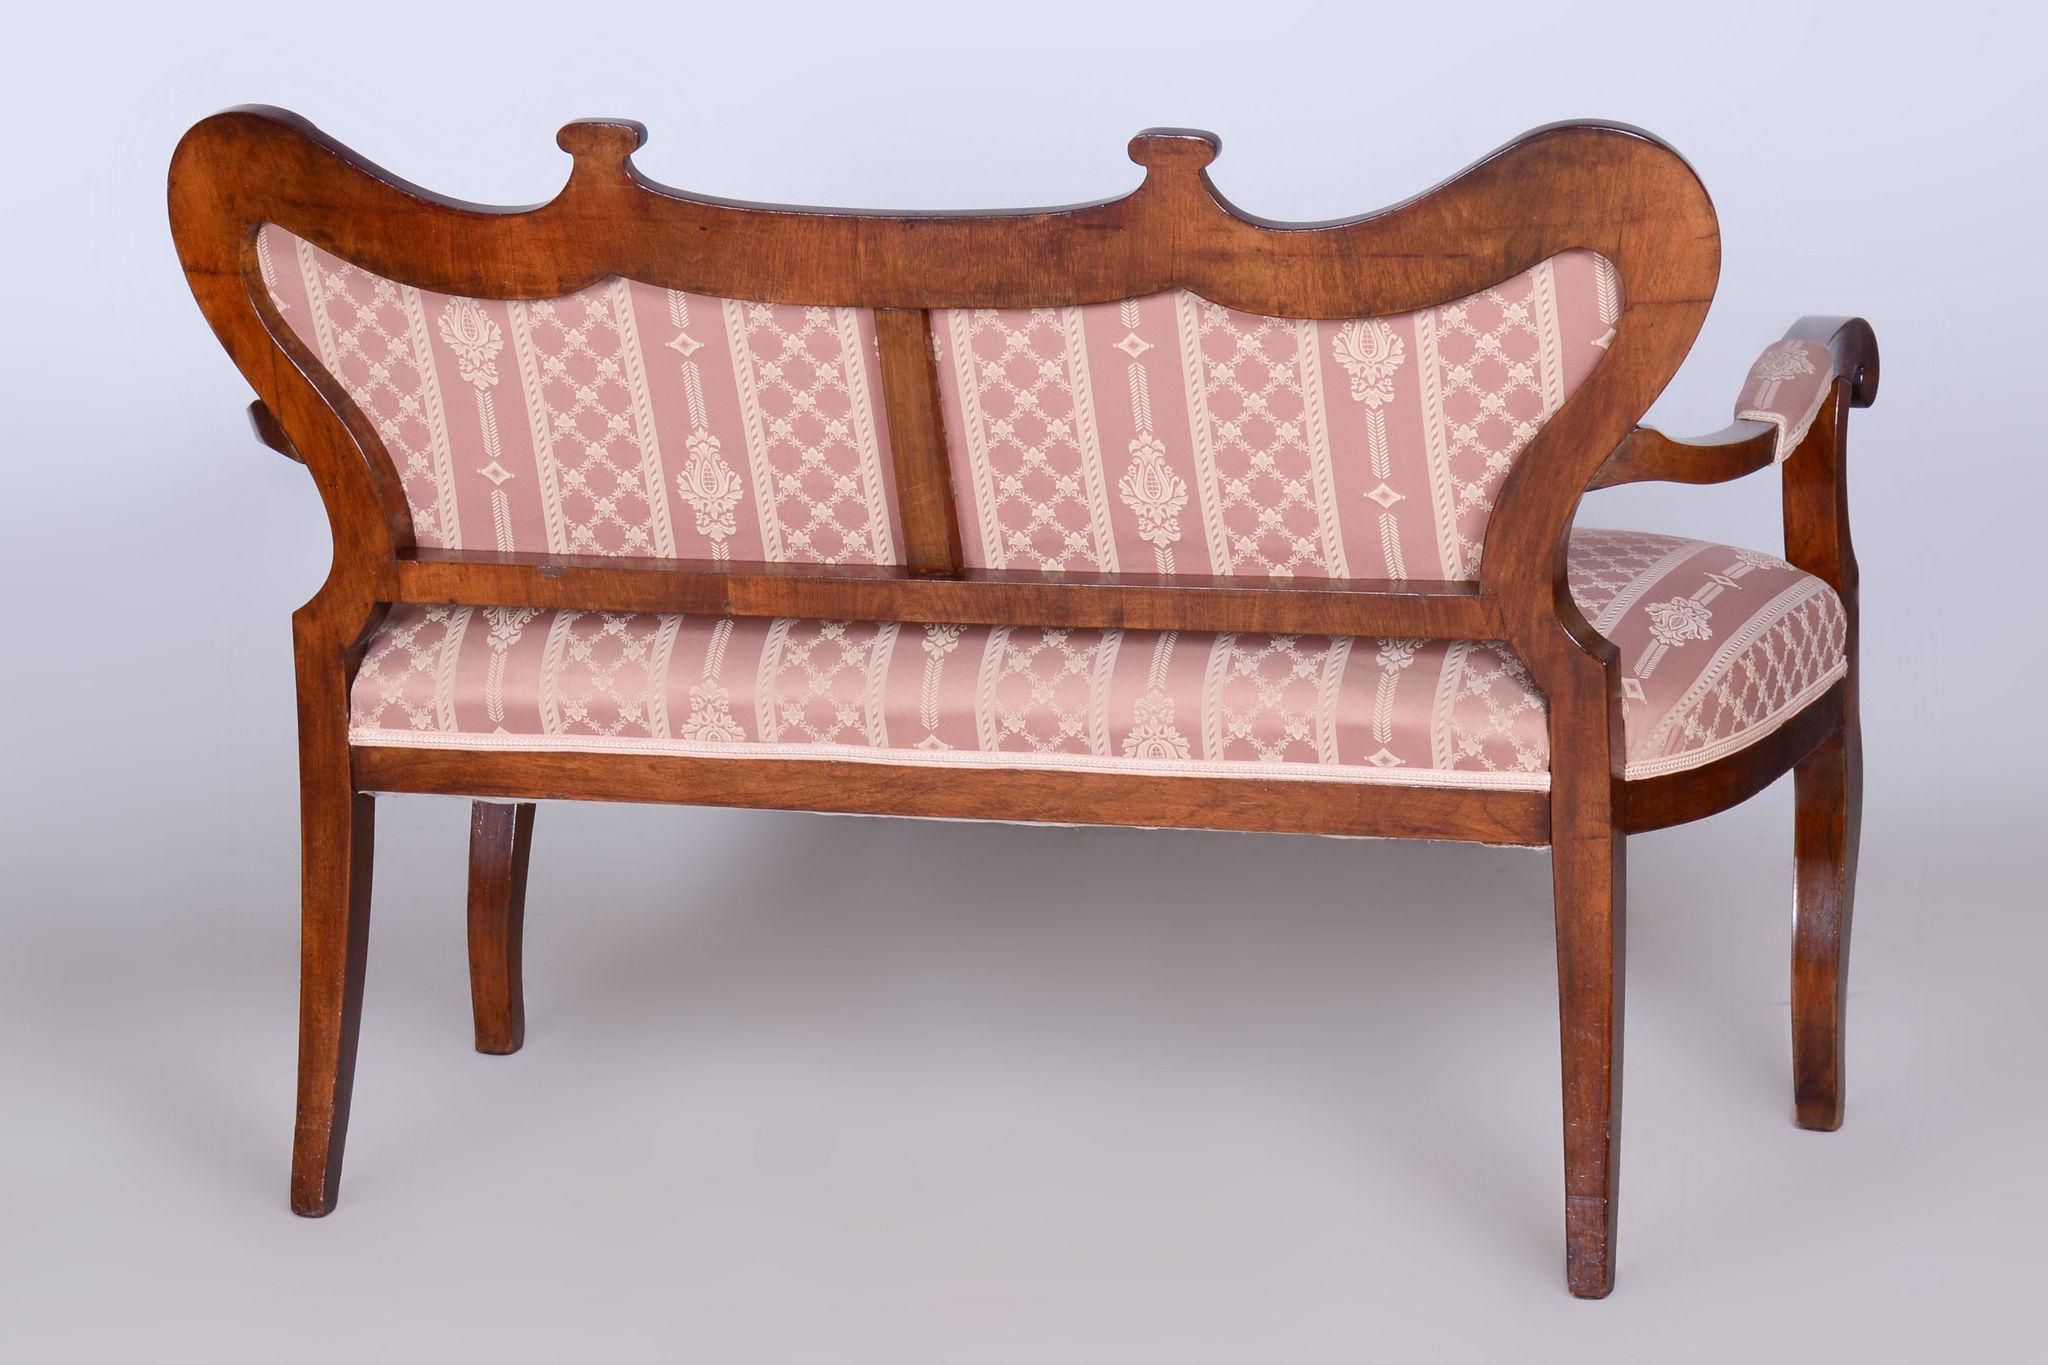 Restored Biedermeier Seating Set, Oak Walnut, Stable Constructon, Austria, 1840s For Sale 5